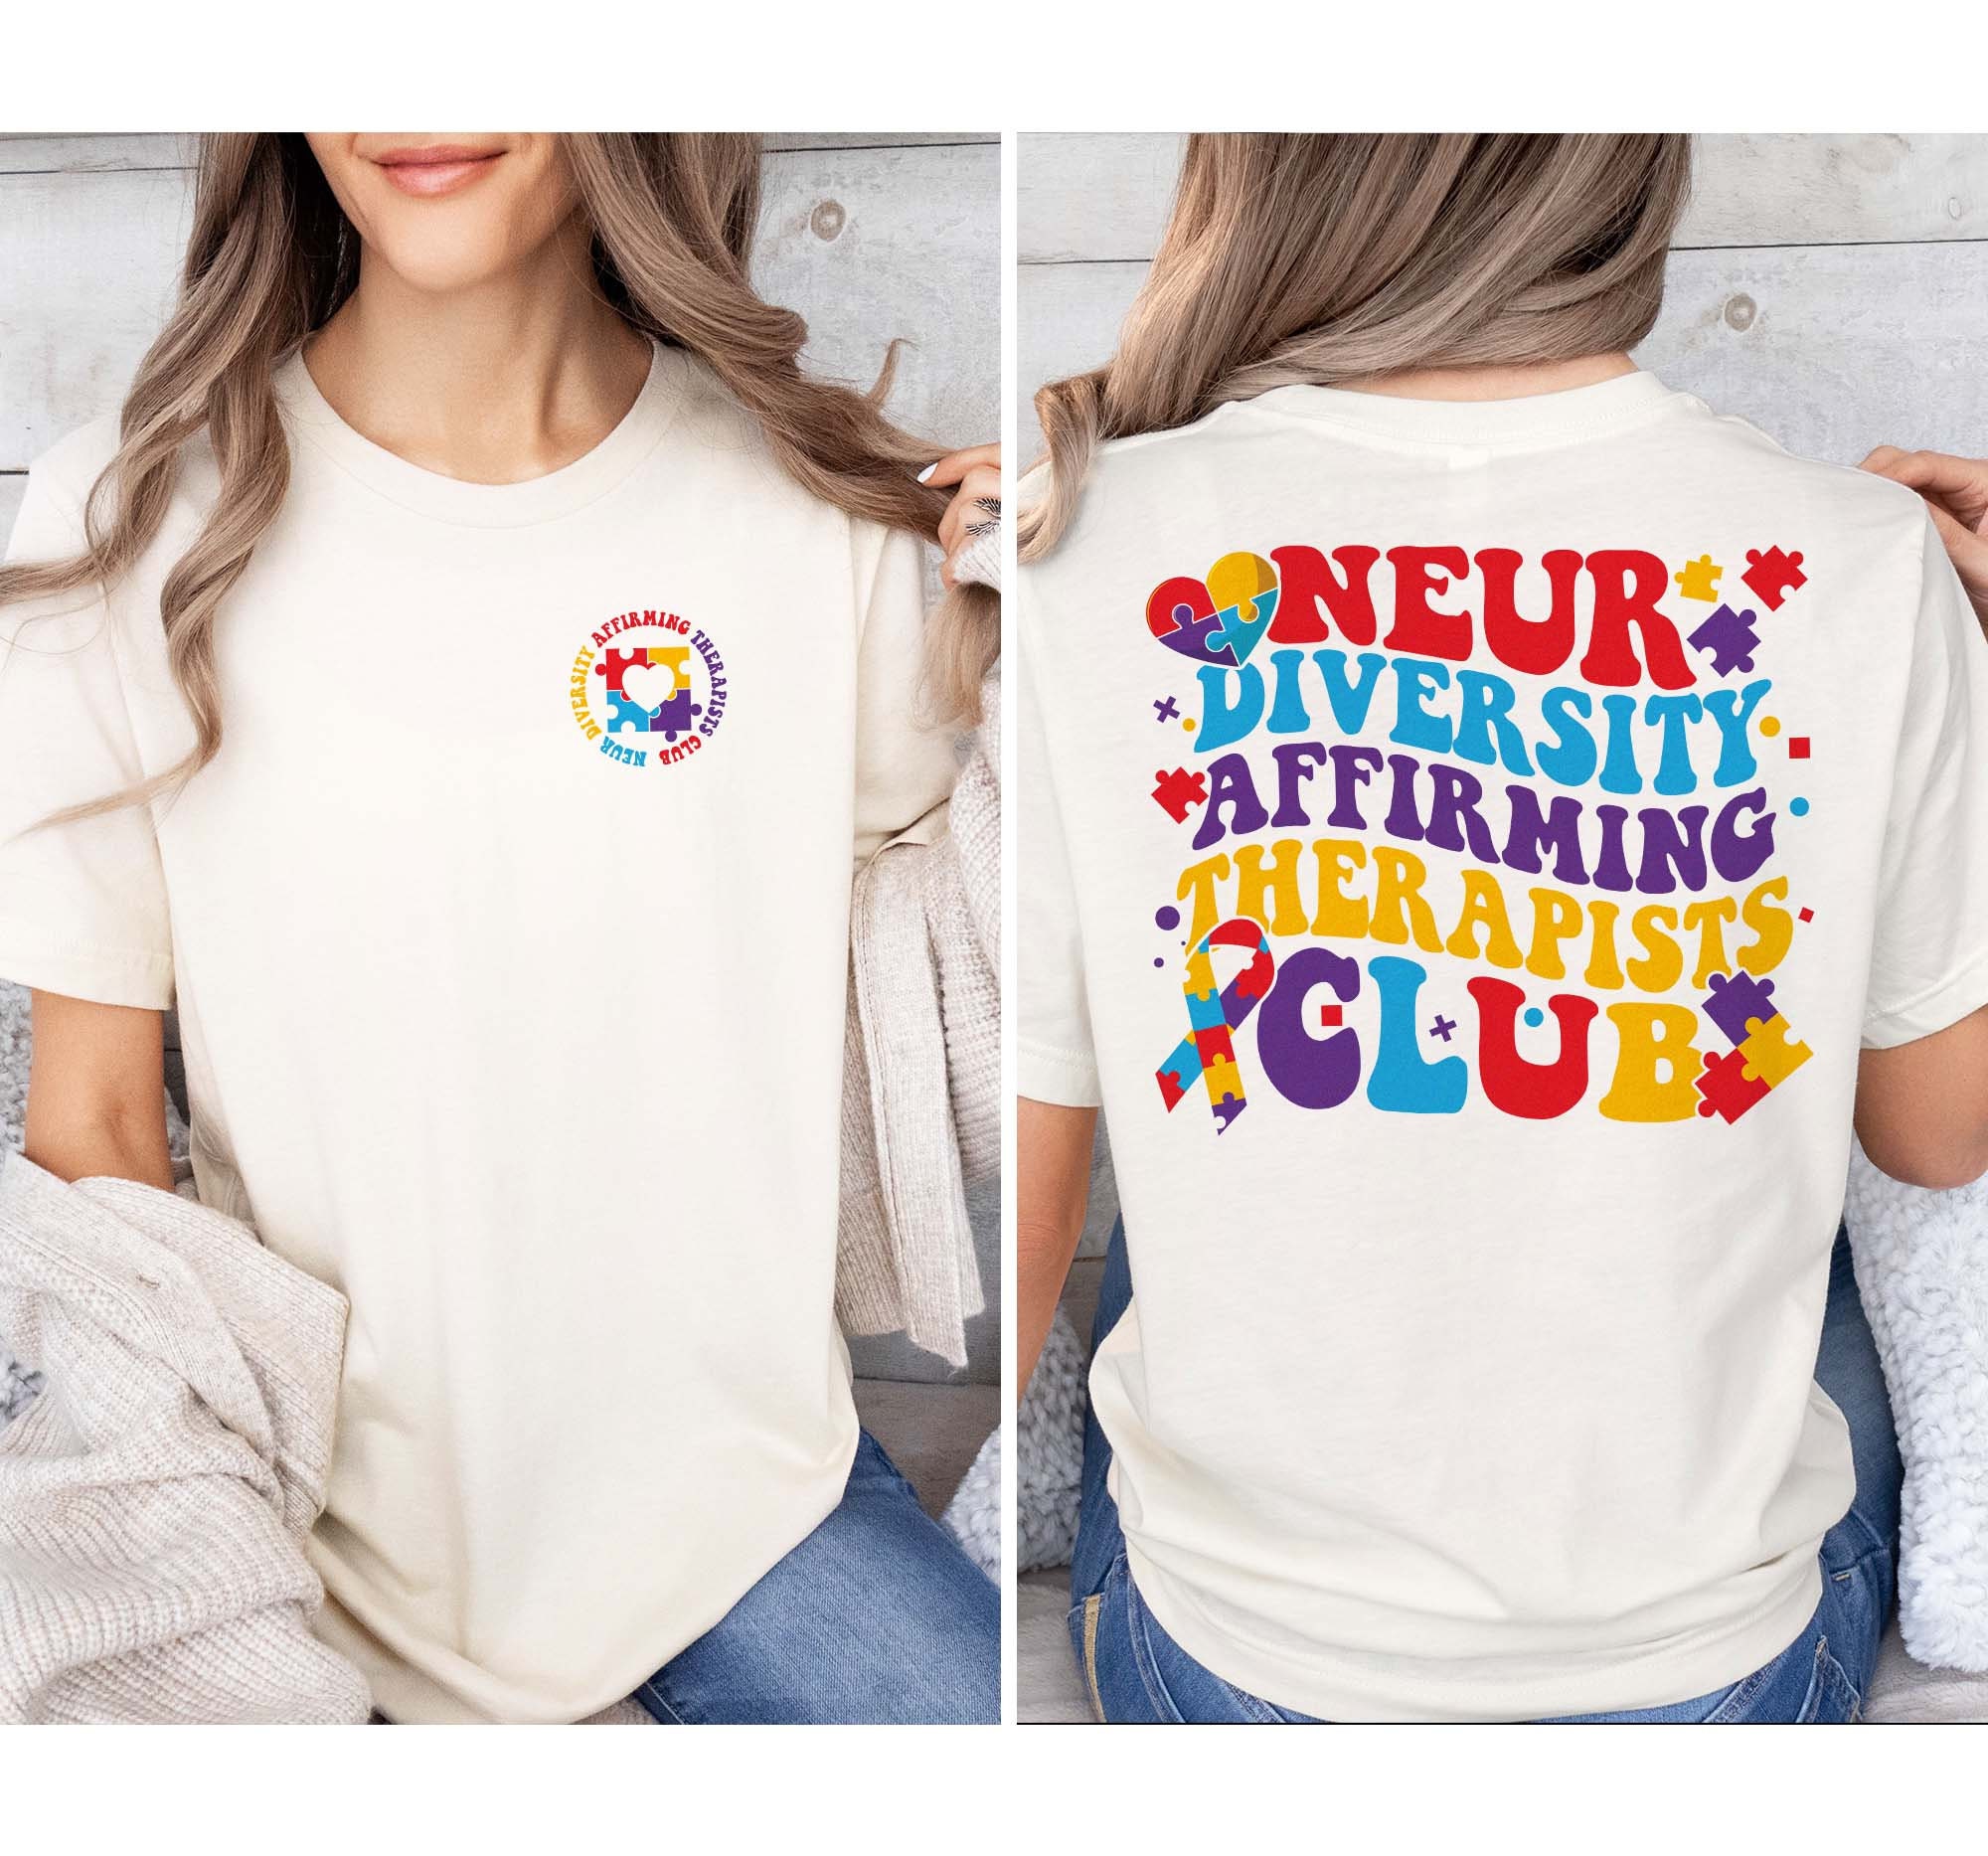 Neurodiversity Affirming Therapists Club Shirt, Autism Awareness Sweatshirt